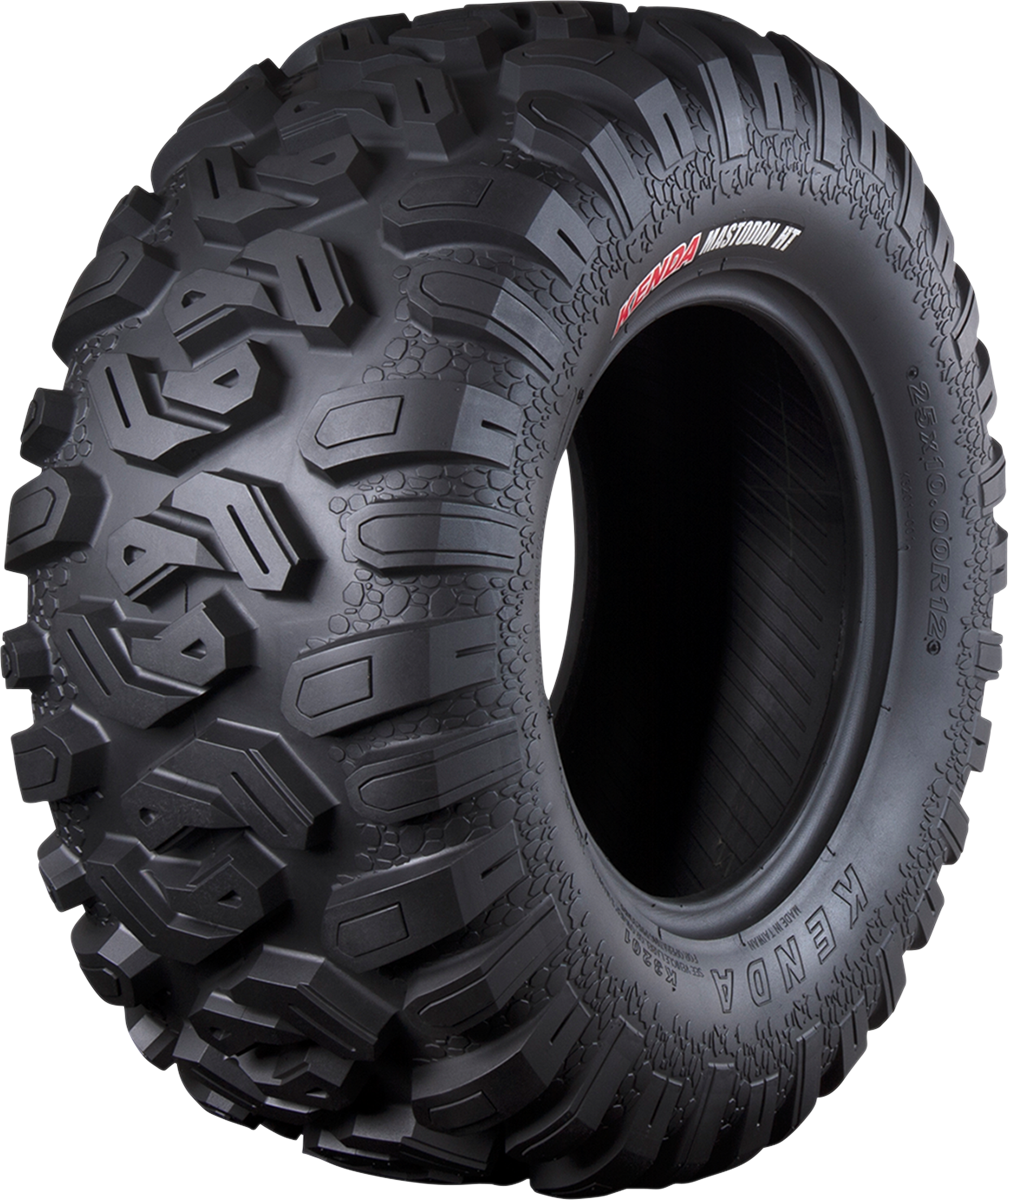 KENDA Tire - K3201 Mastodon HT - Front/Rear - 30x10R15 - 8 Ply 26243022